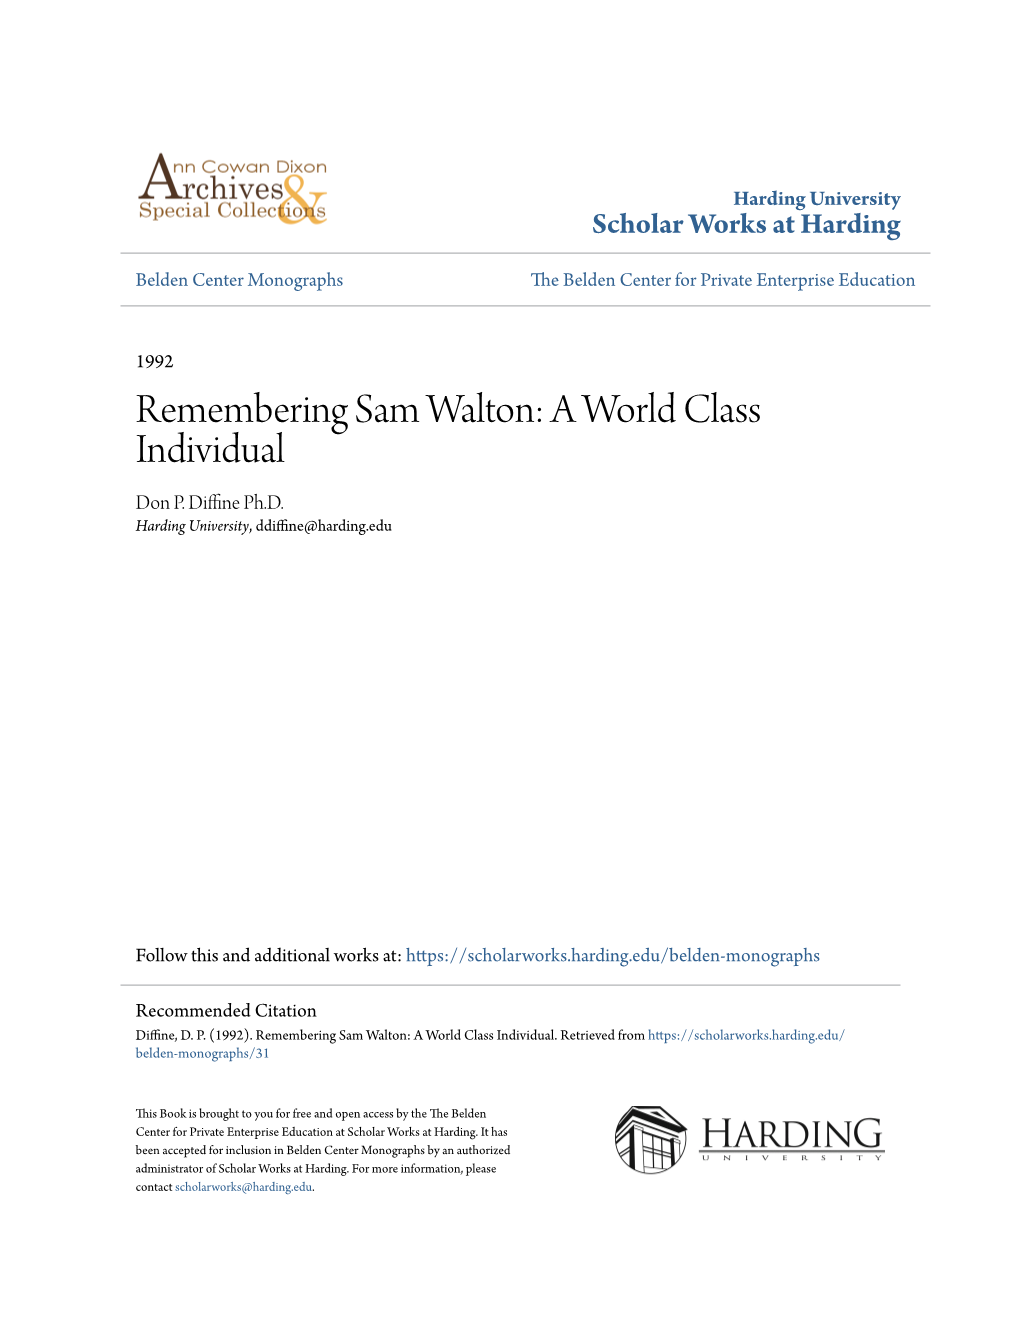 Remembering Sam Walton: a World Class Individual Don P